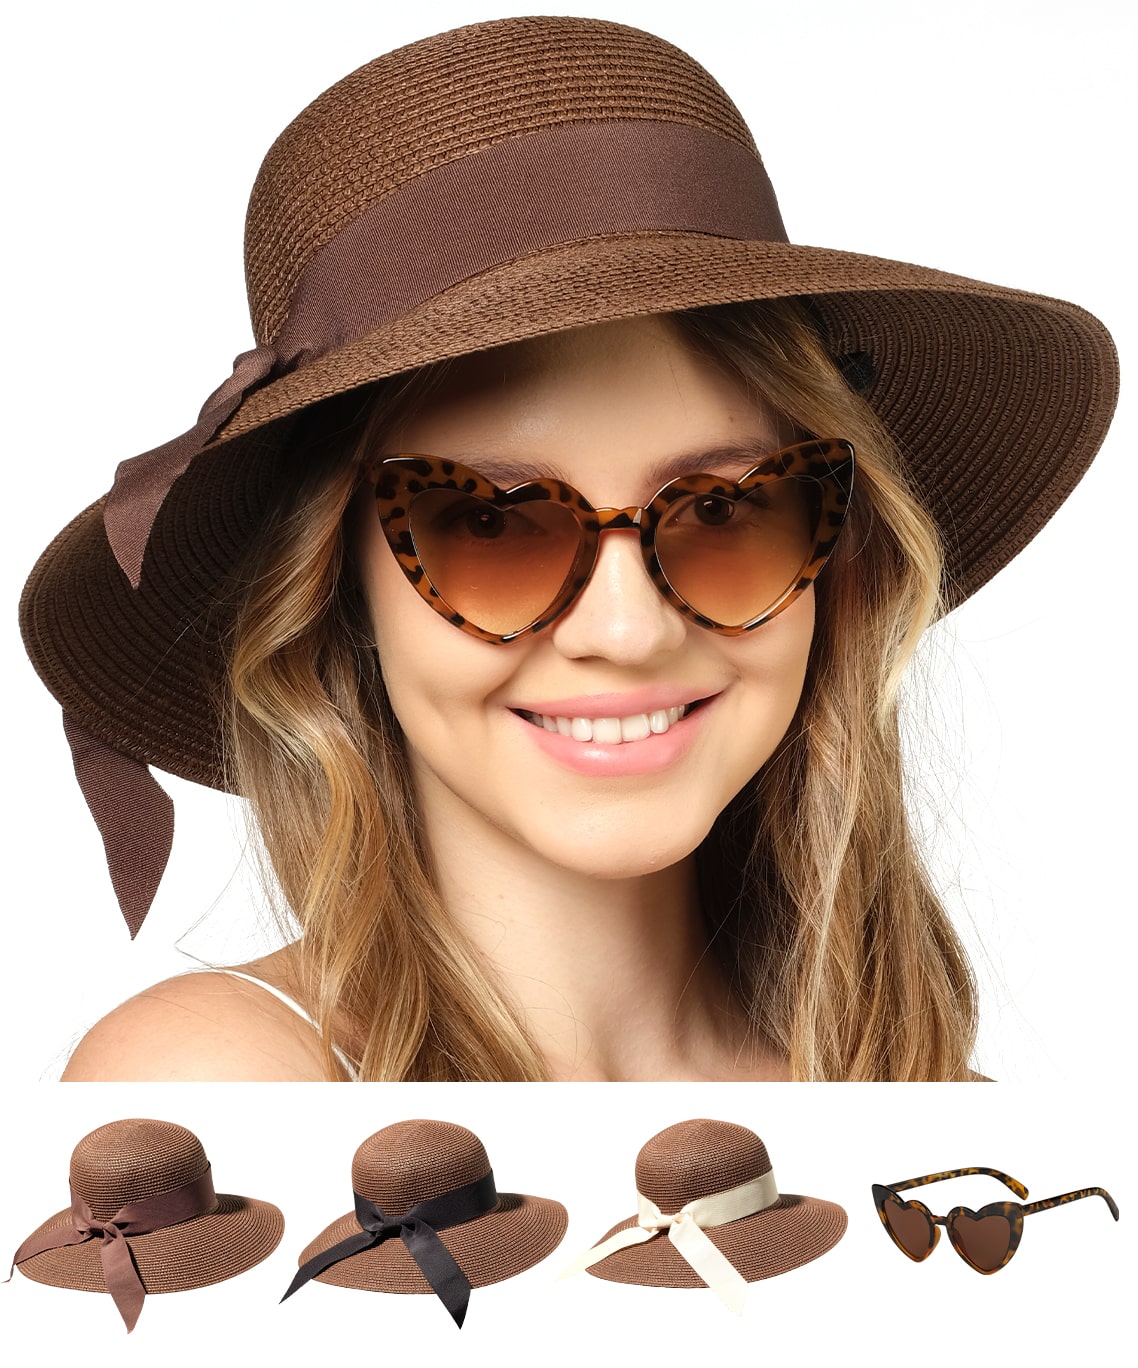 Brown Panama Straw Beach Hats For Women -Packable Sun Hats-Funcredible